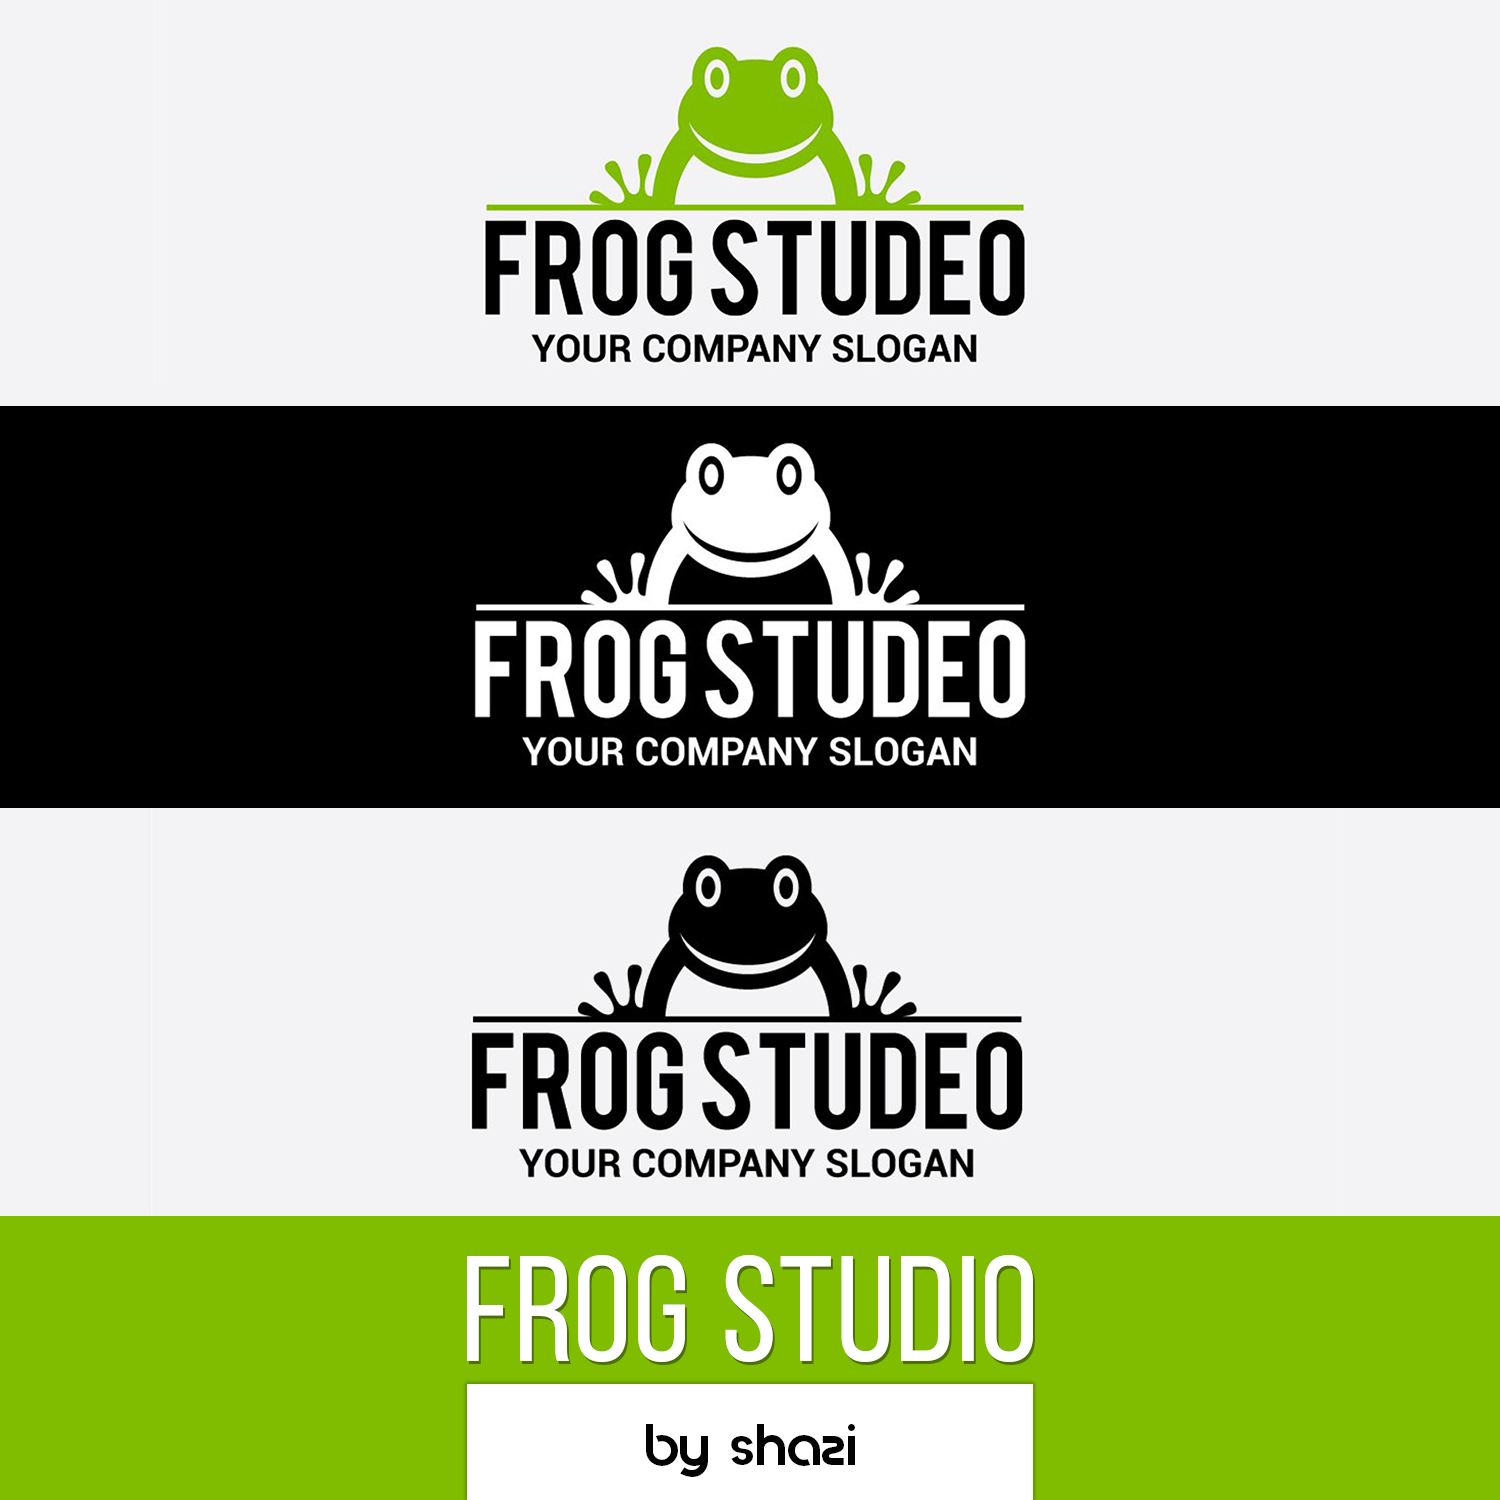 Frog Studio cover.